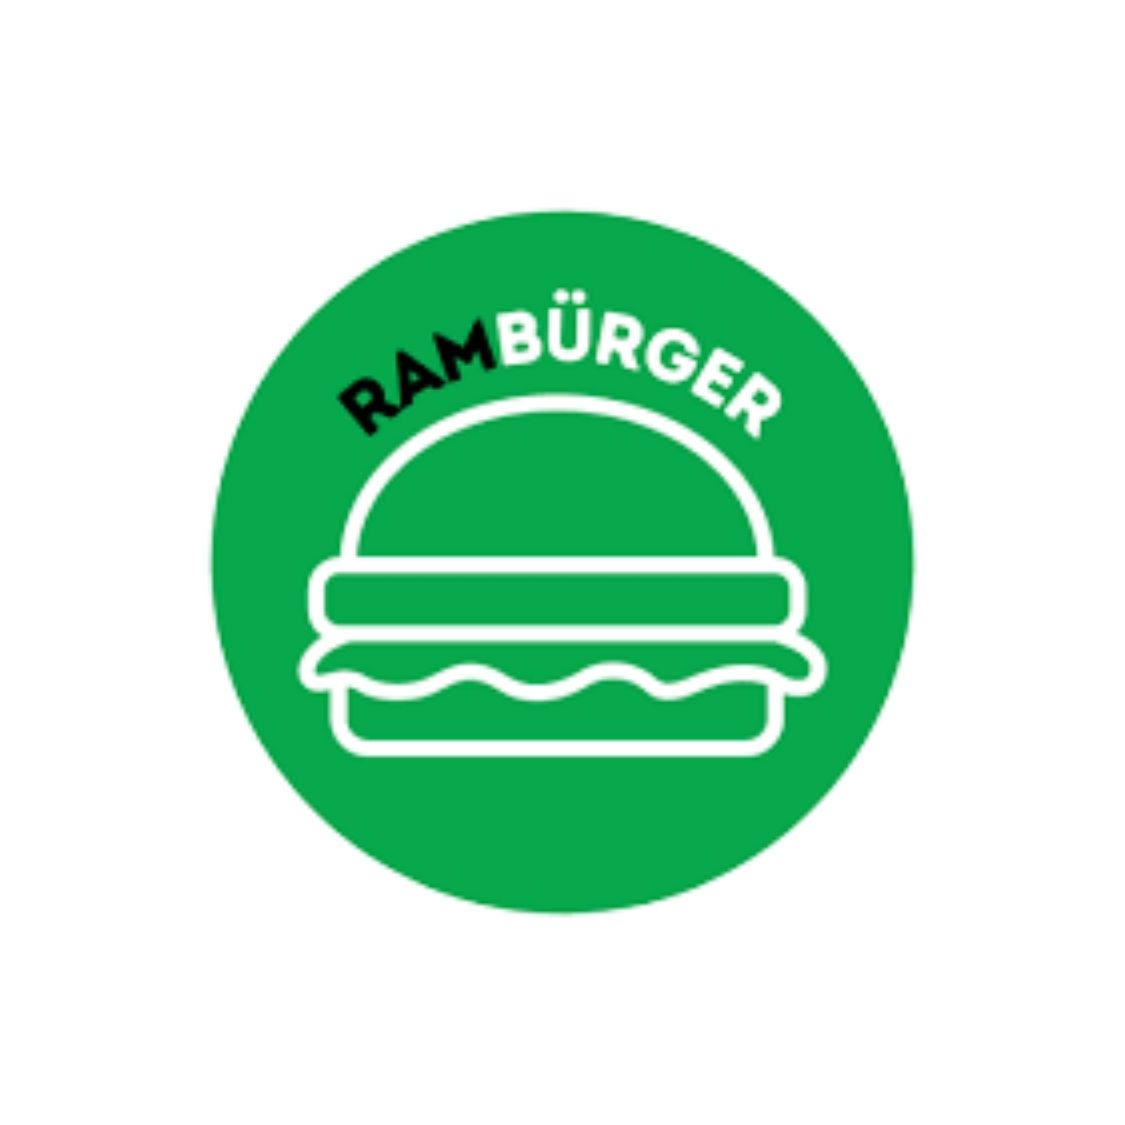 Ramburger Logo.jpg